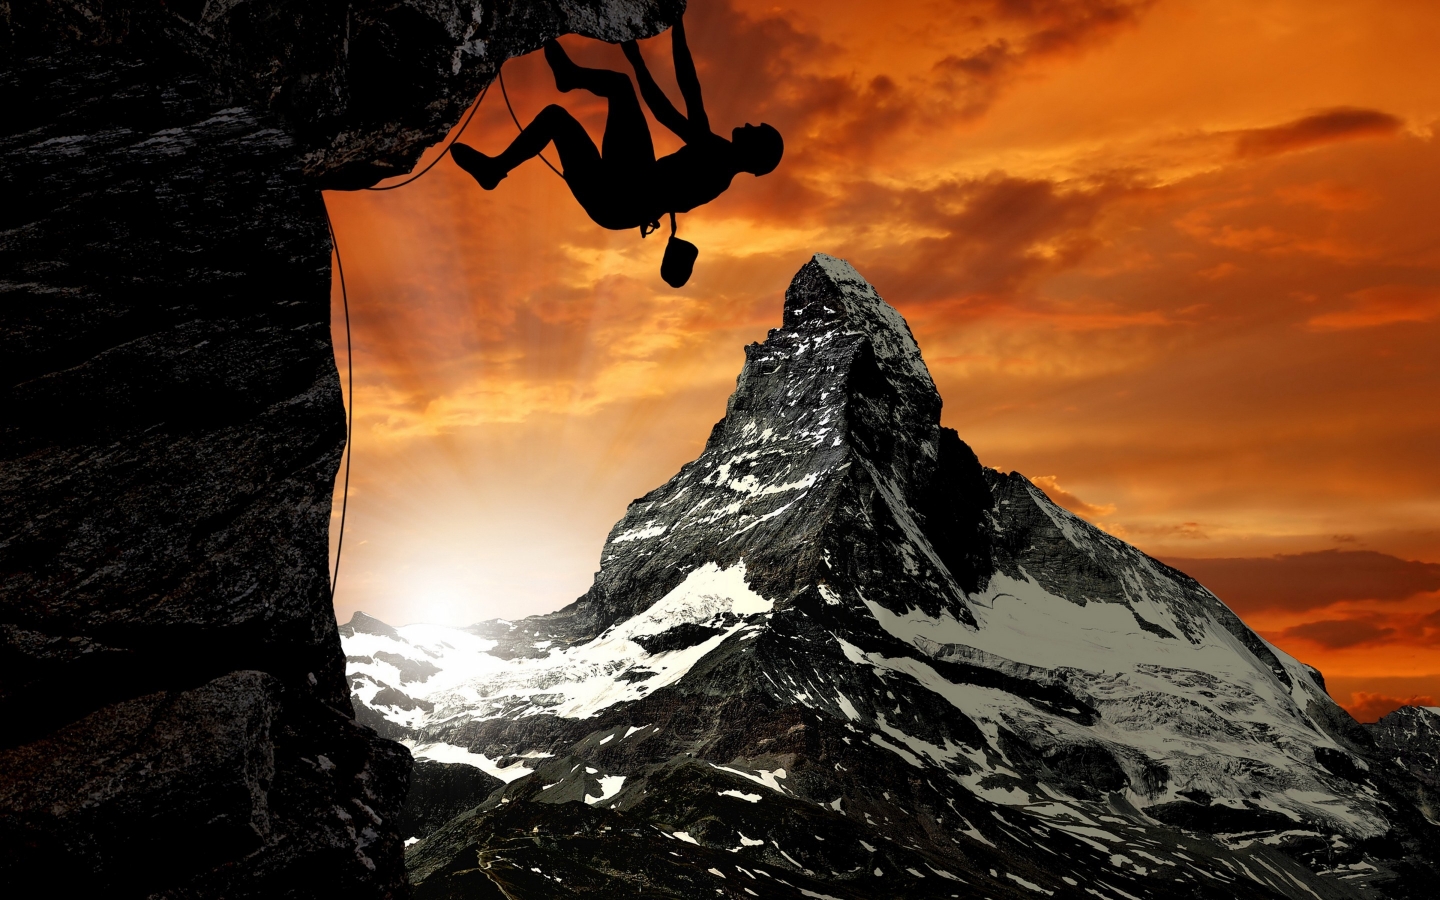 Mountain Climber for 1440 x 900 widescreen resolution